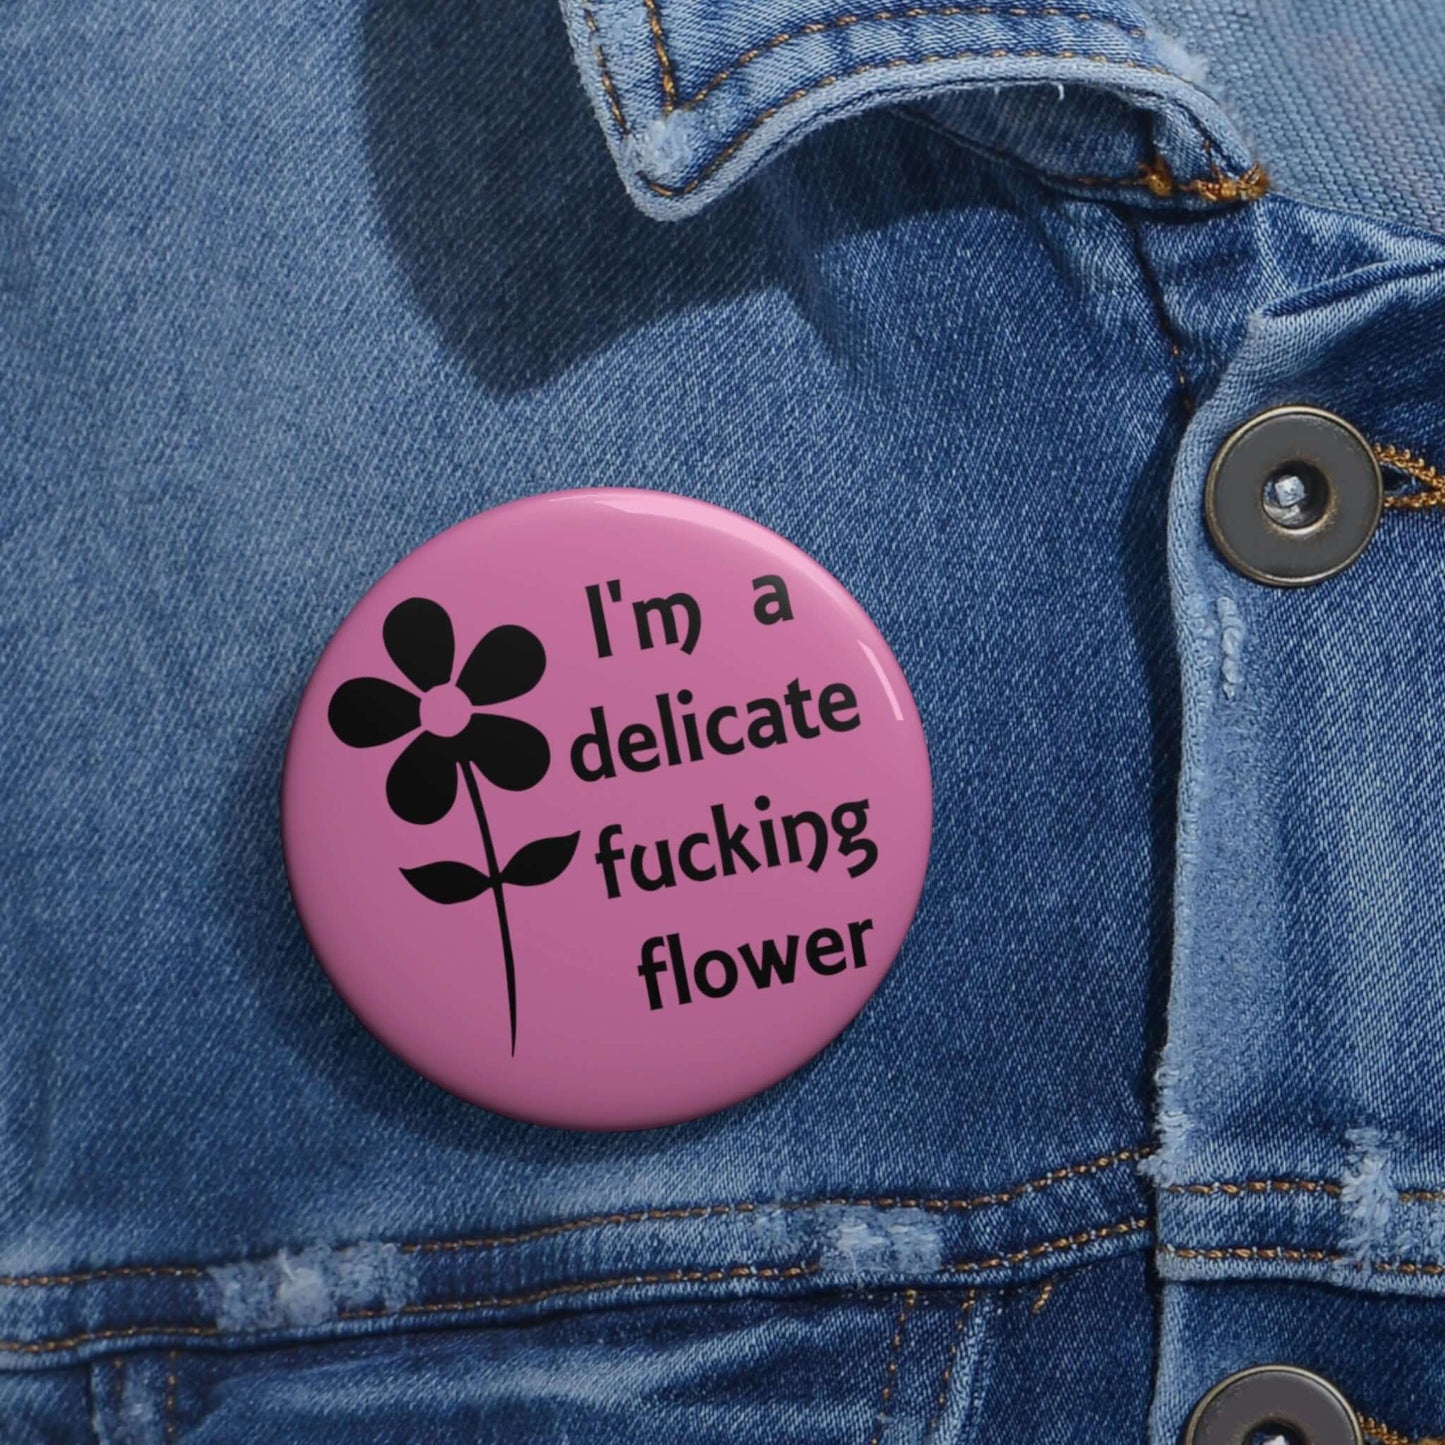 Delicate flower pinback button